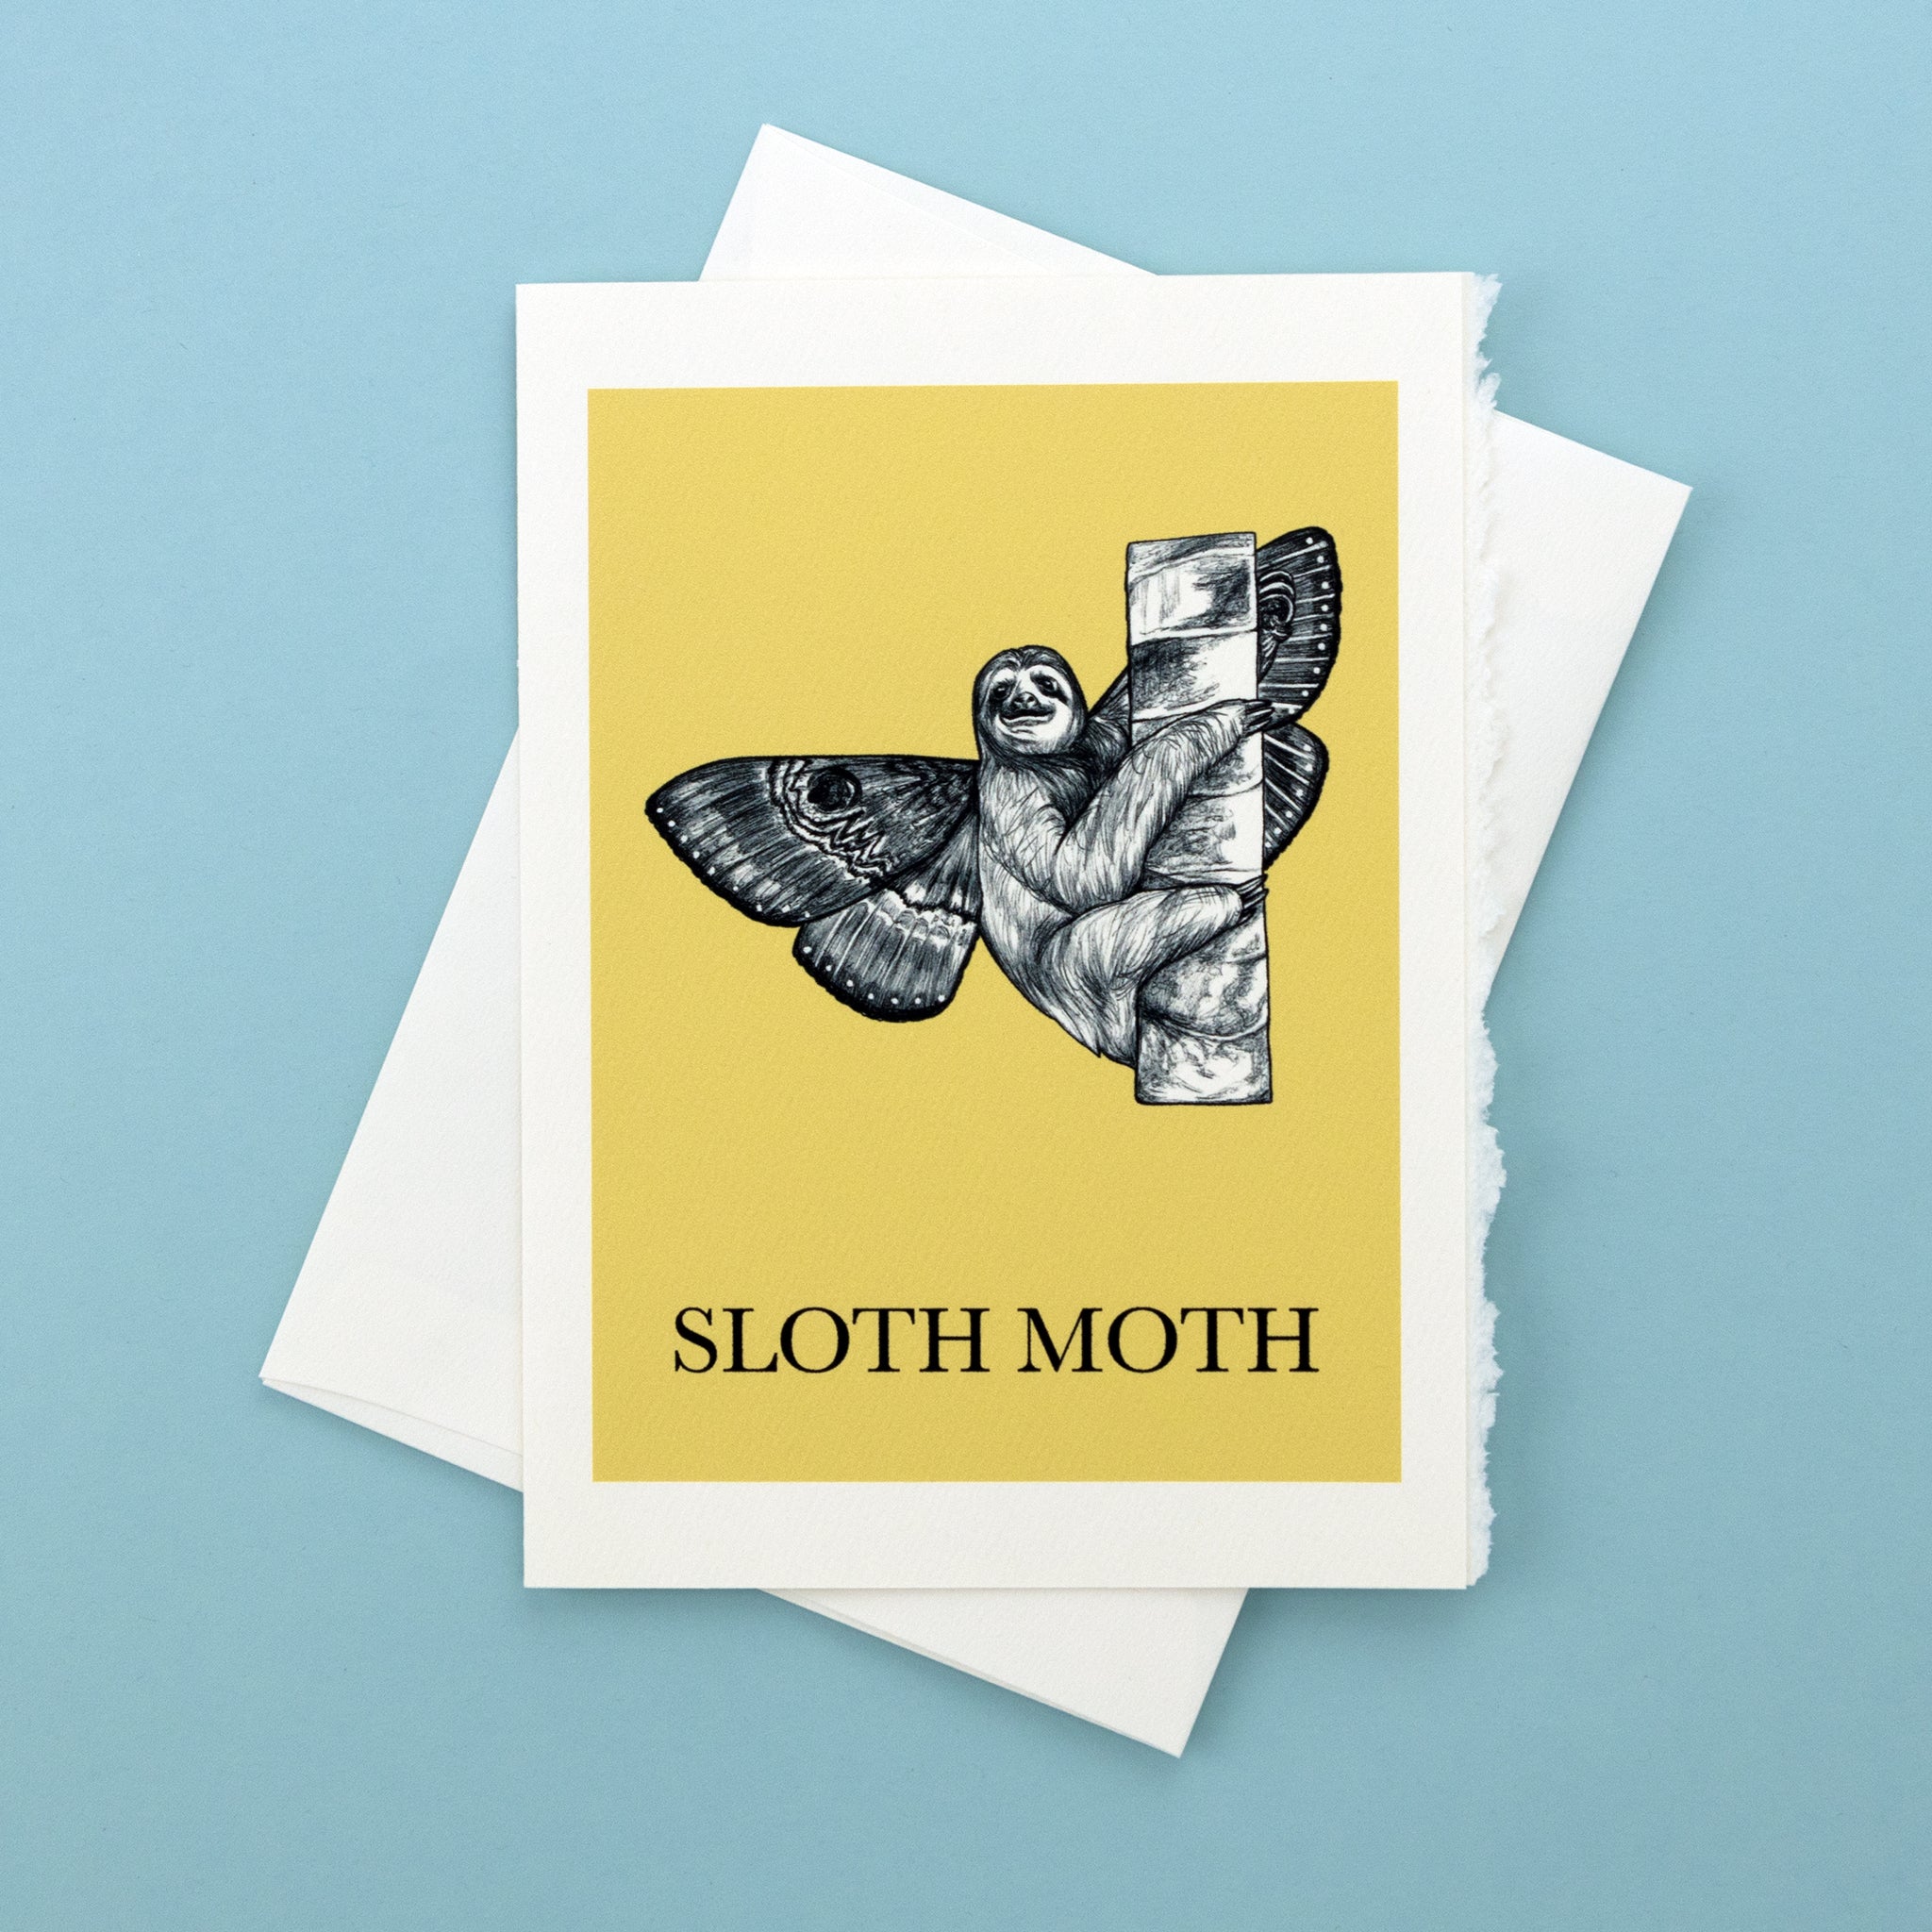 Sloth Moth | Sloth + Moth Hybrid Animal | 5x7" Greeting Card